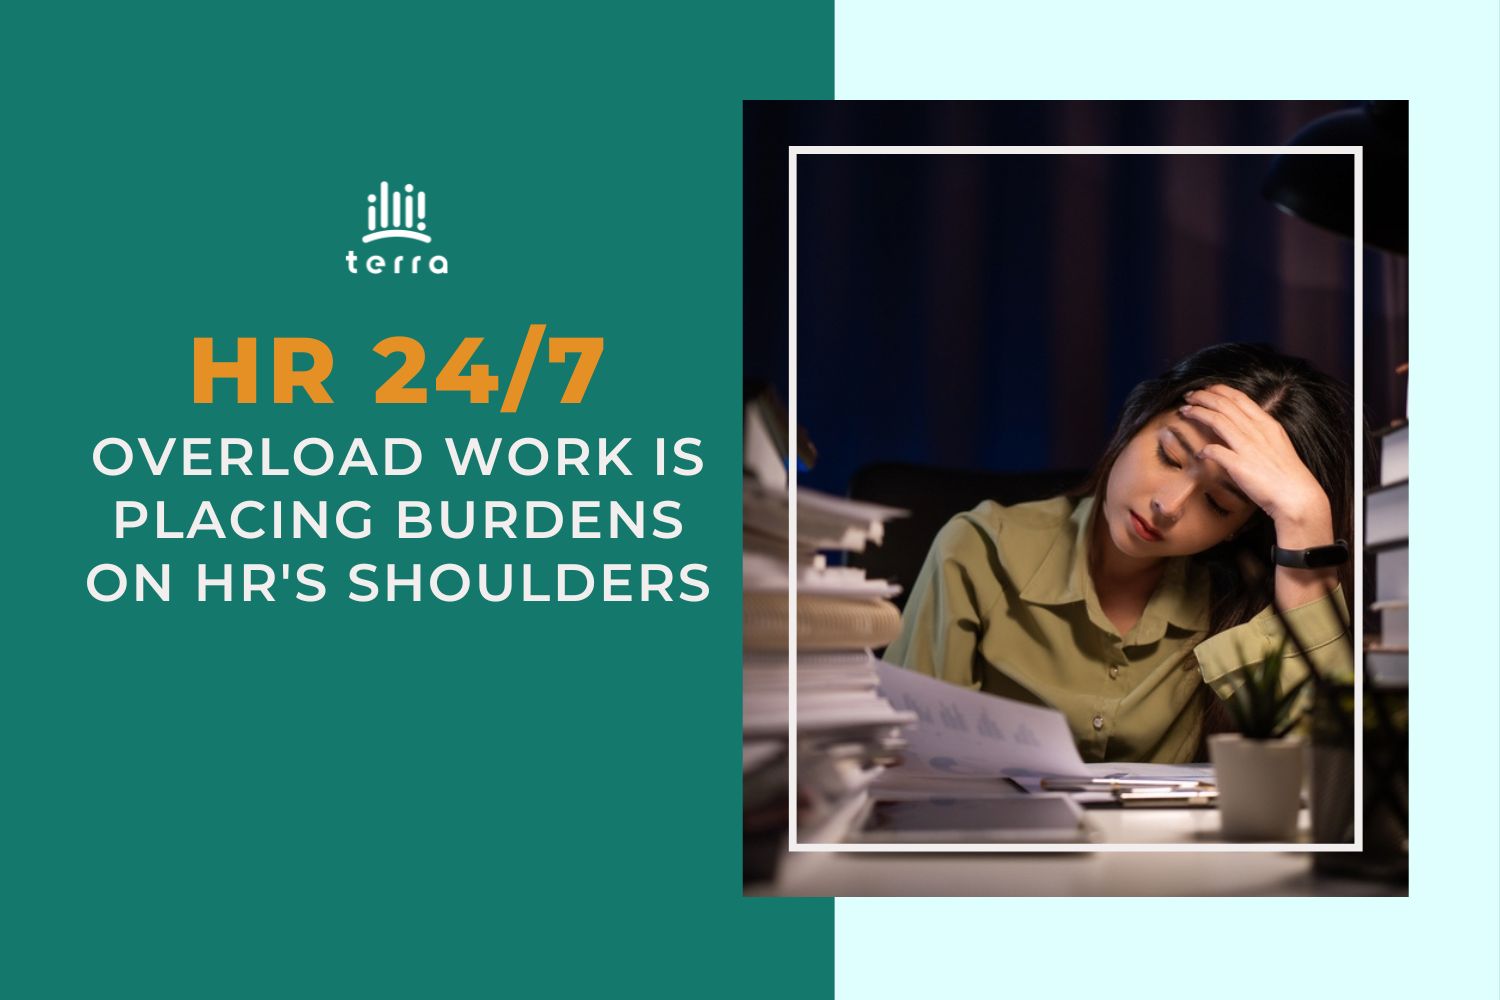 HR 24/7 – Overload work is placing burdens on HR’s shoulders